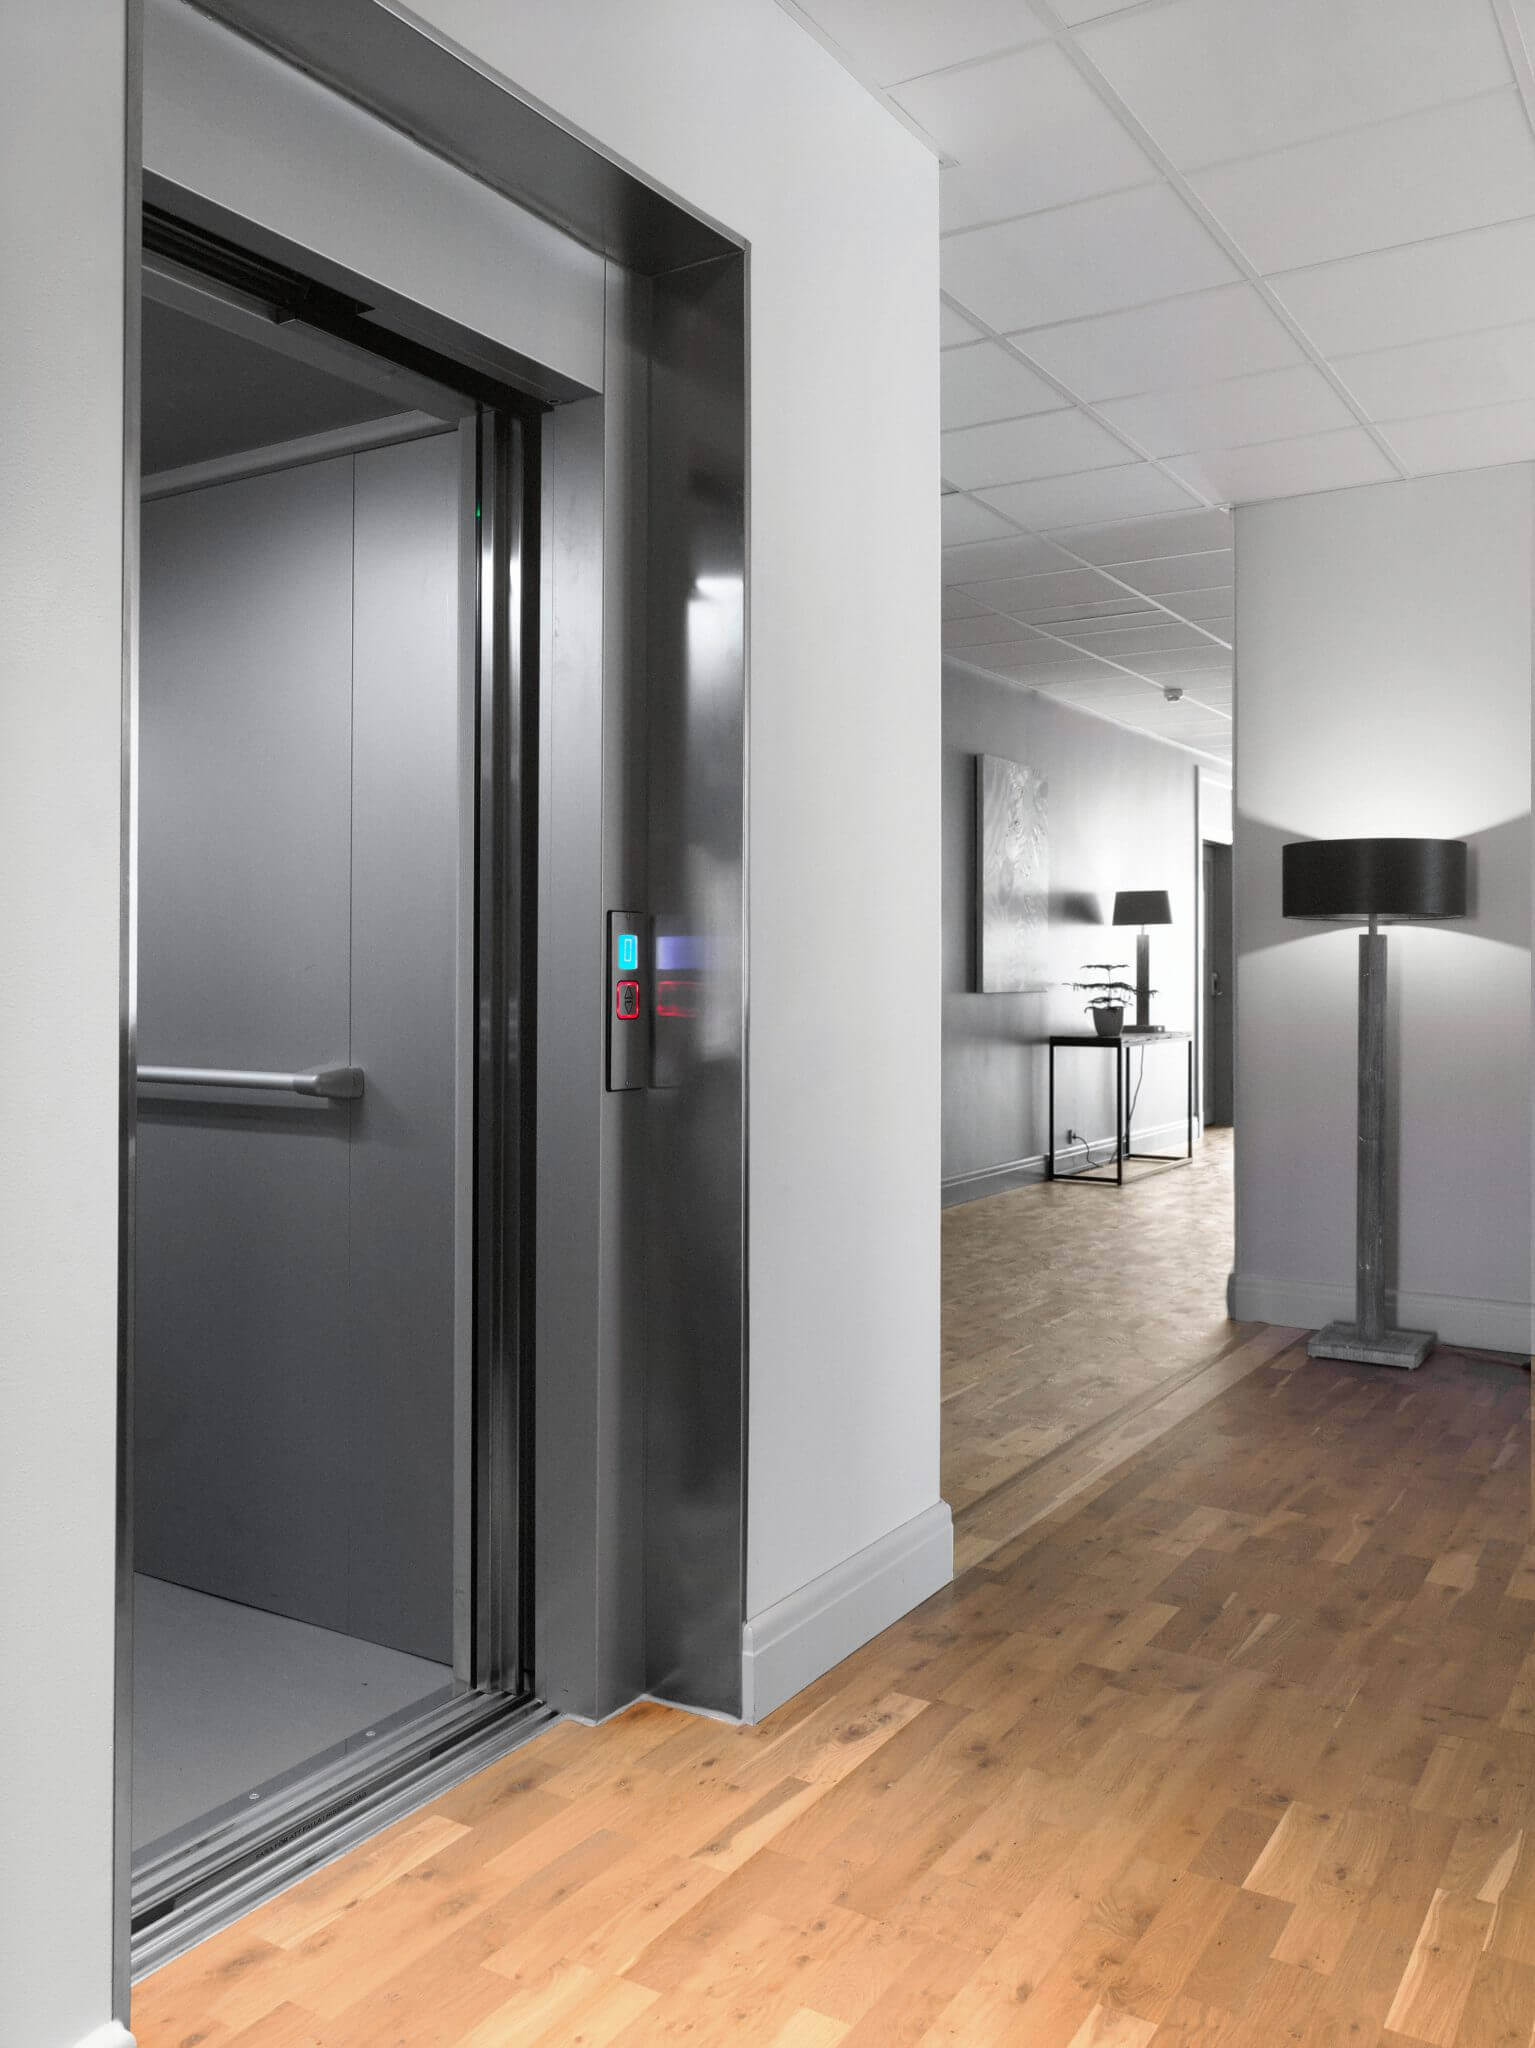 Aritco PublicLift Access is a perfect elevators for hospitals and nursing homes